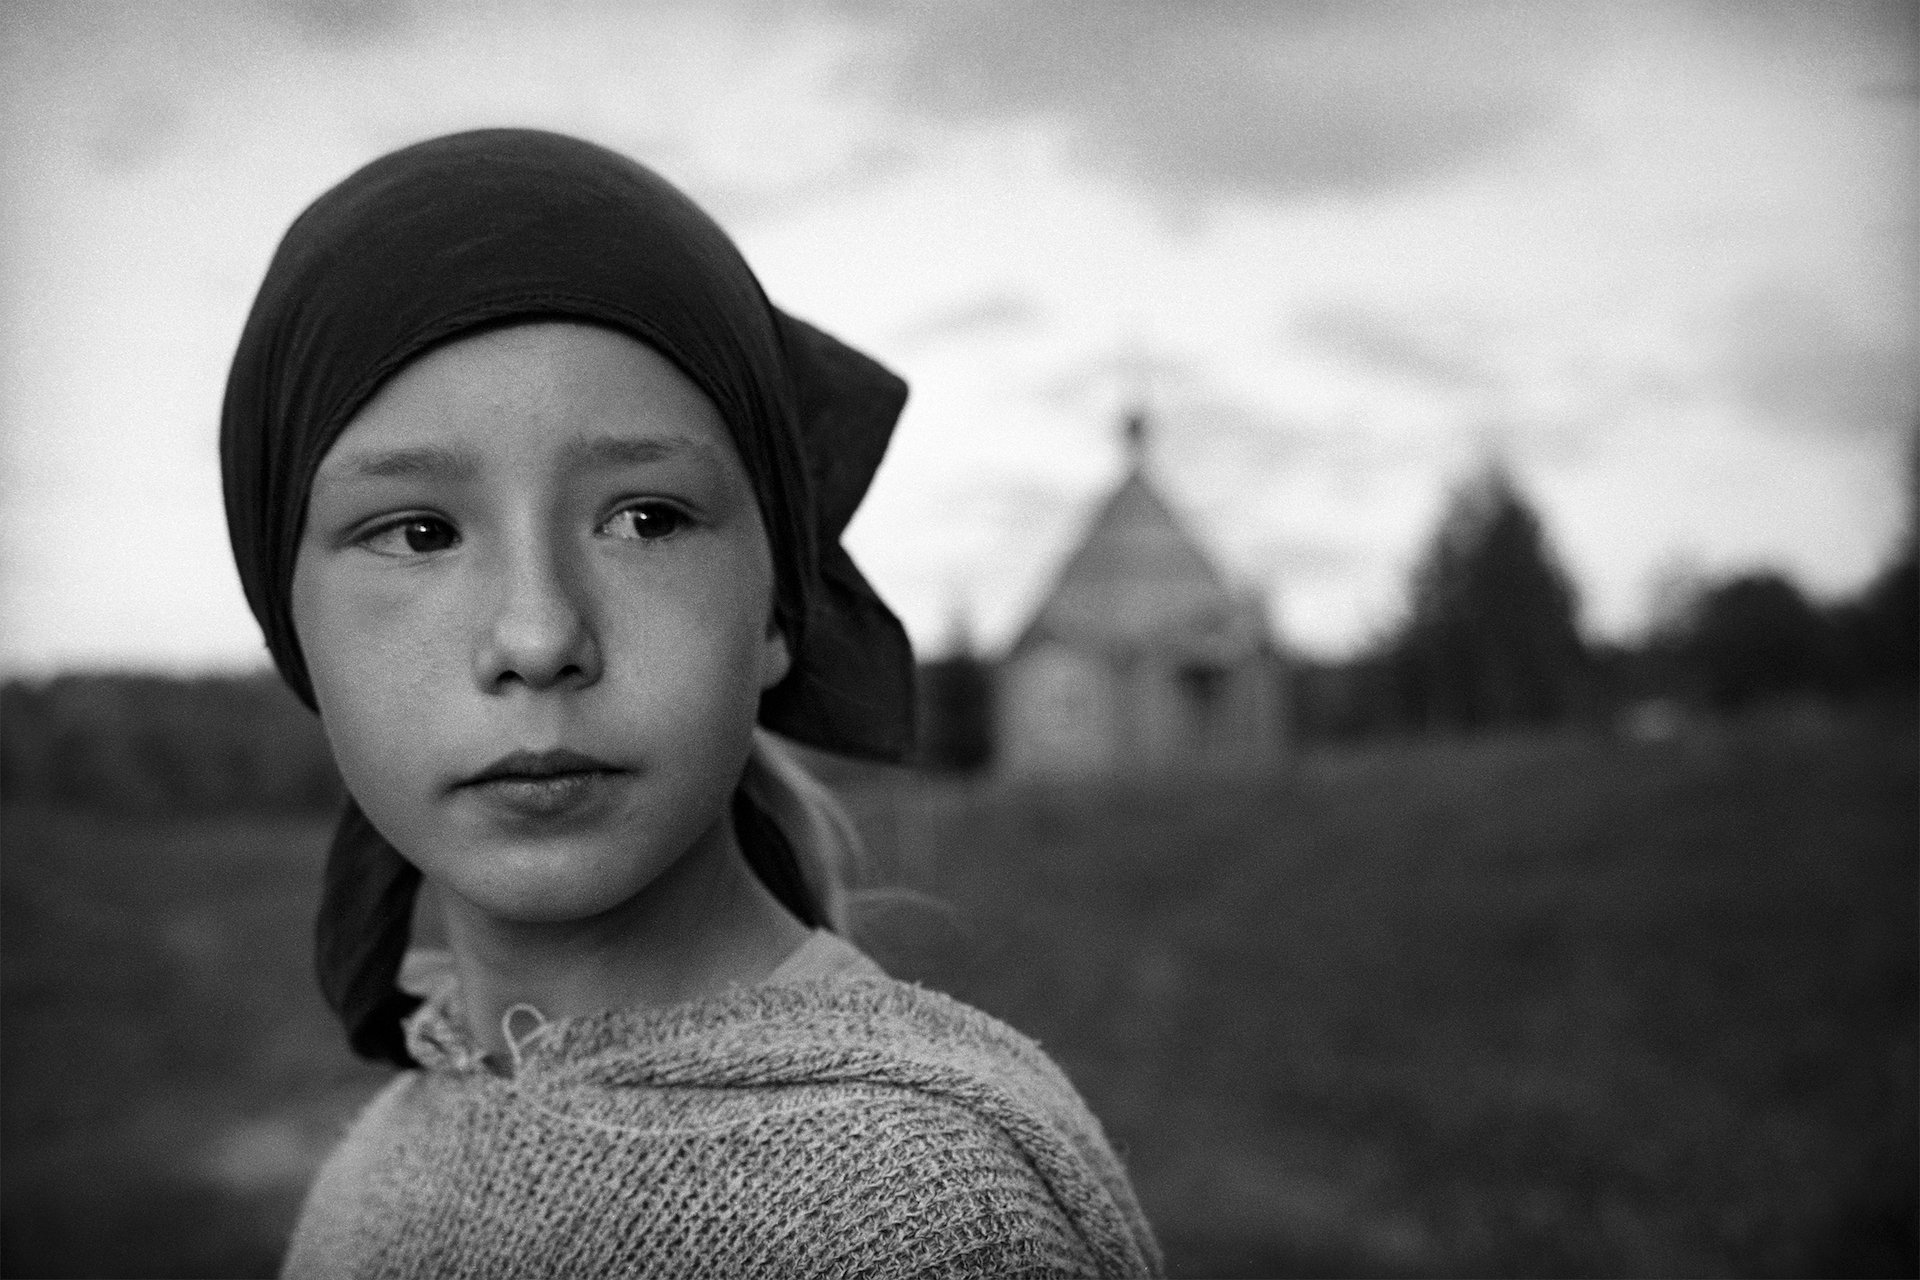 Behind Shoulders, village Interposelok, Olonetsky district, Karelia, Russia (2005)